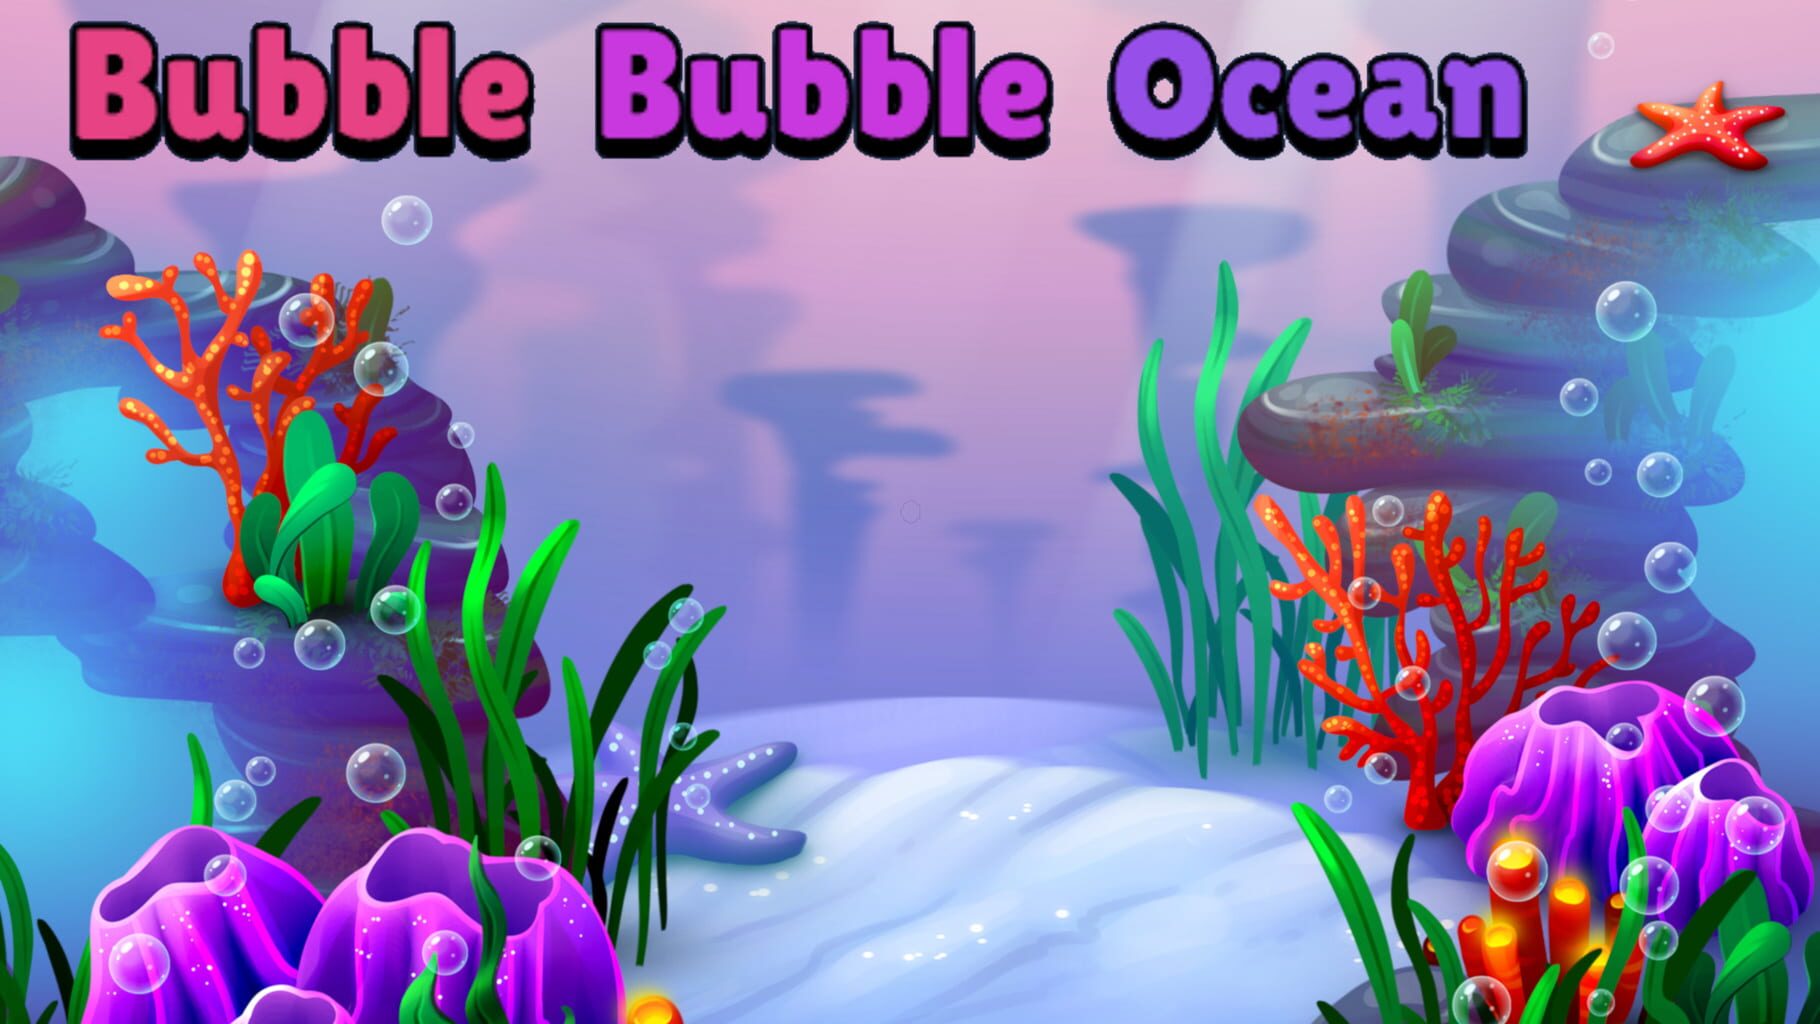 Bubble Bubble Ocean artwork